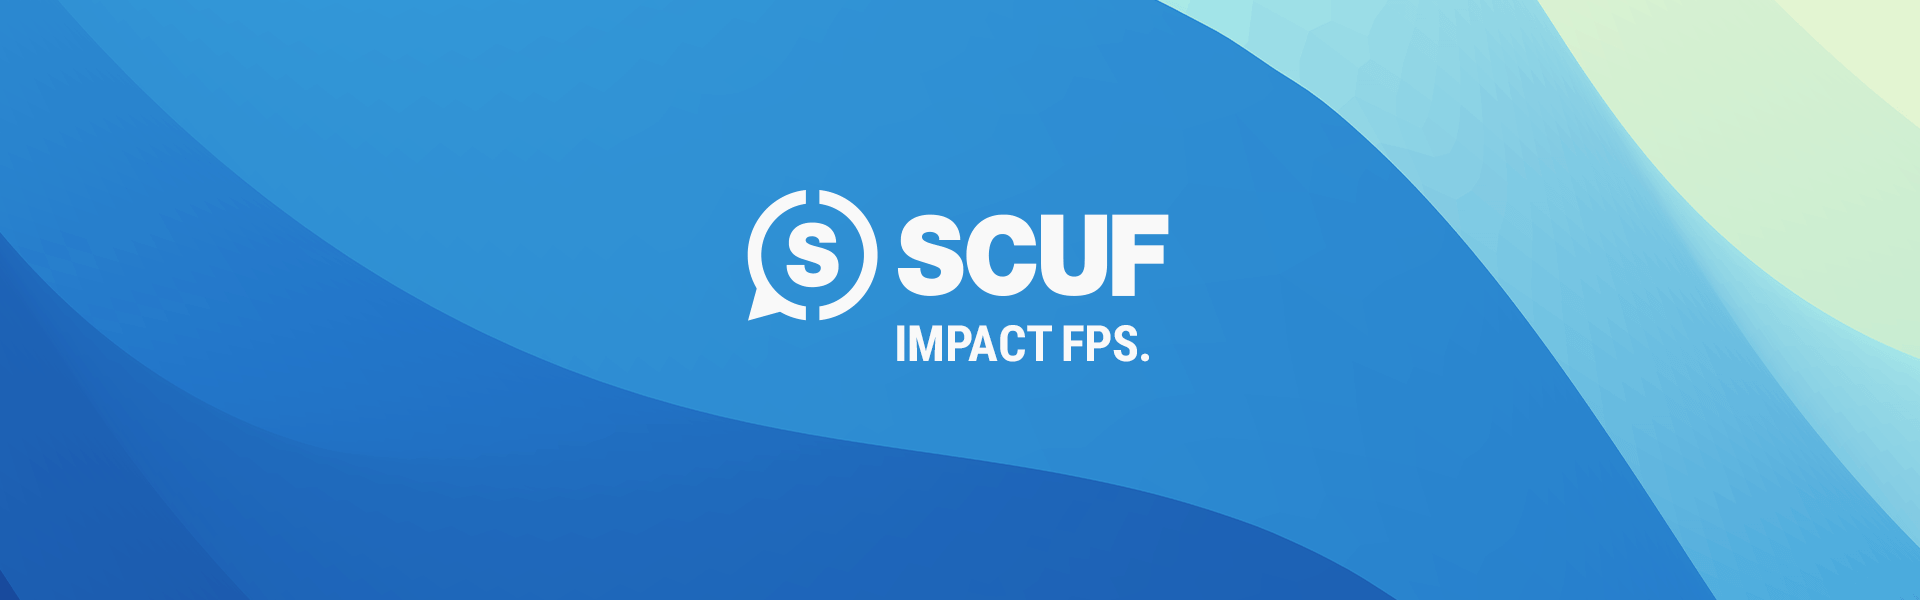 Impact FPS